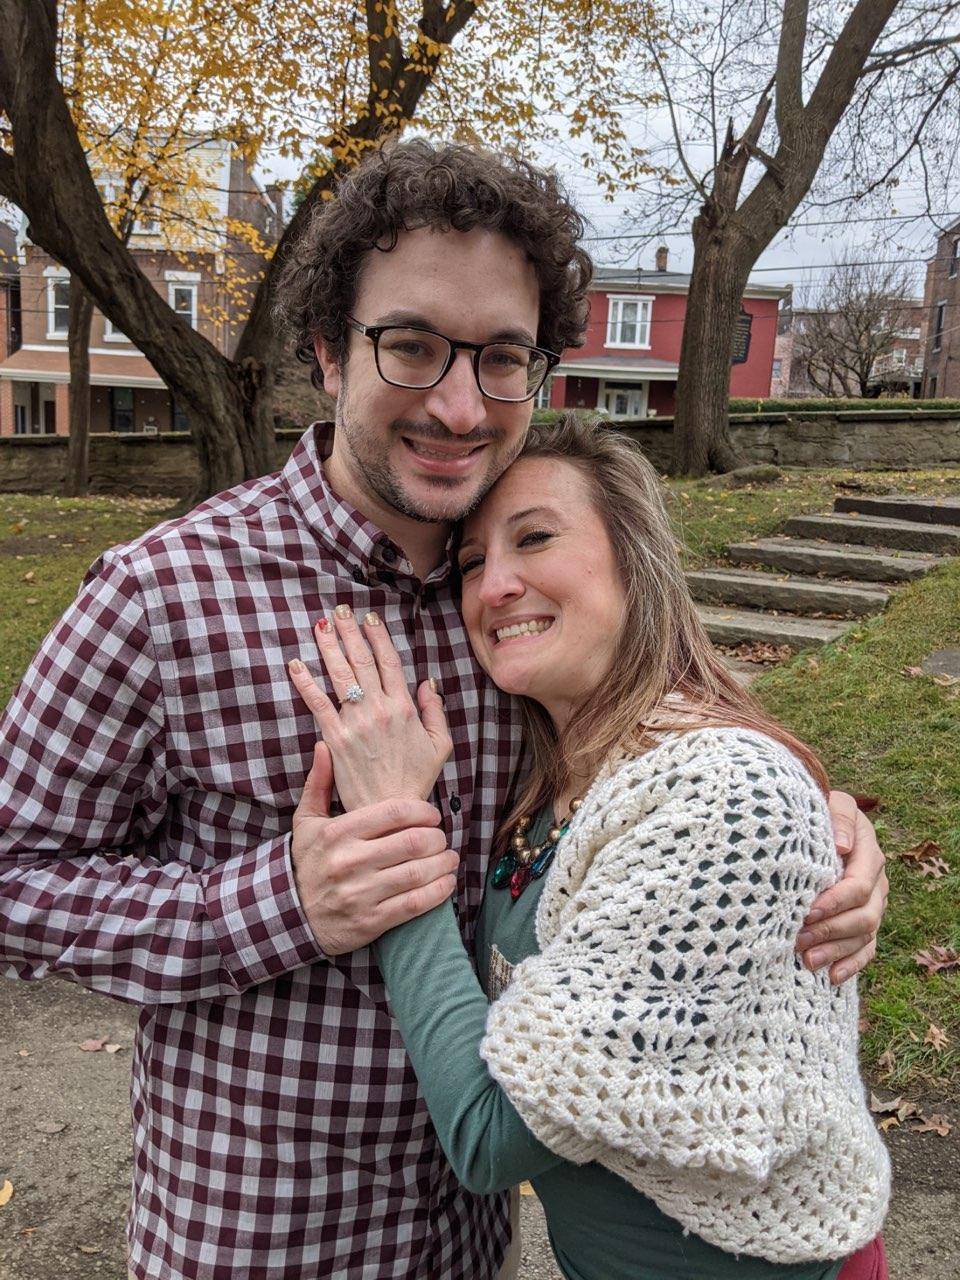 Henne Engagement Ring Couple Aric & Caroline Hugging Outdoors